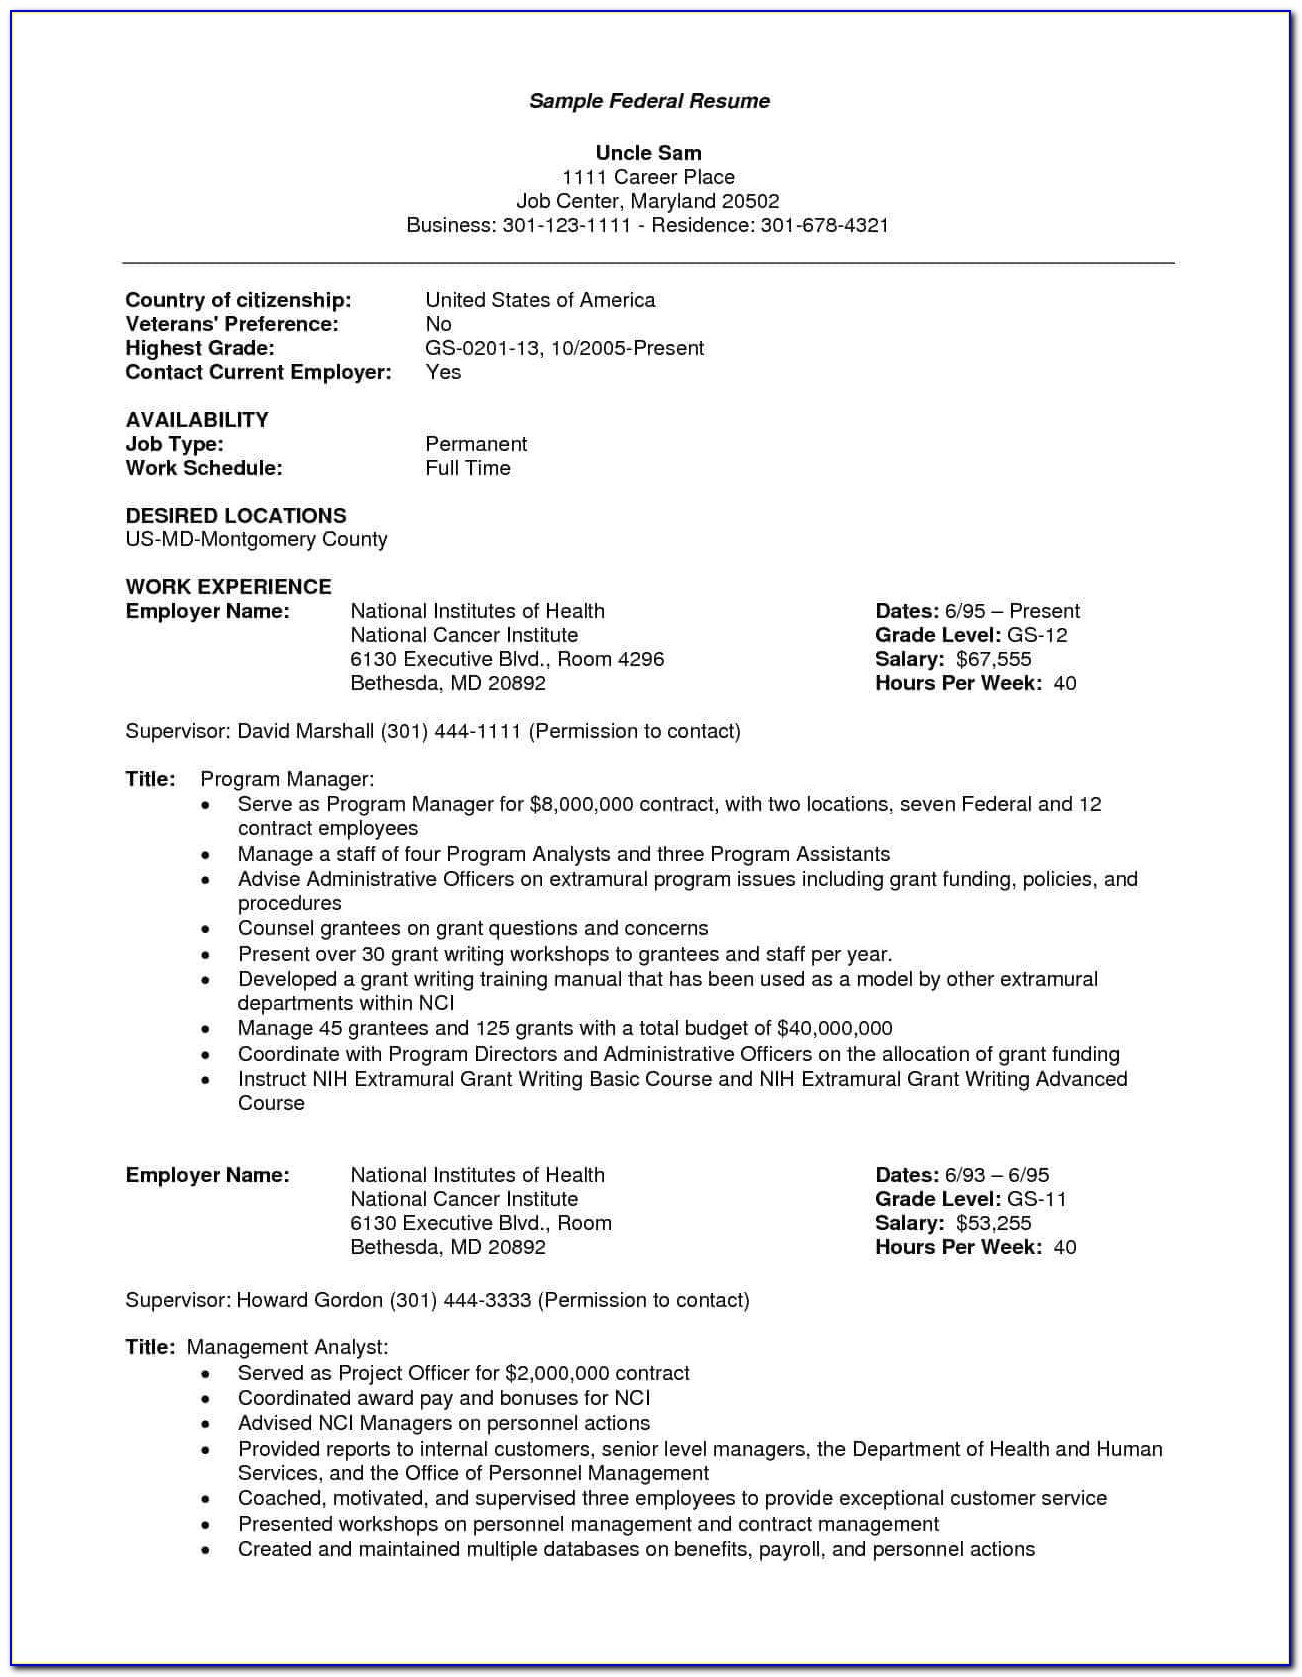 Federal Resume Writing Federal Resume Writing Services Washington Dc